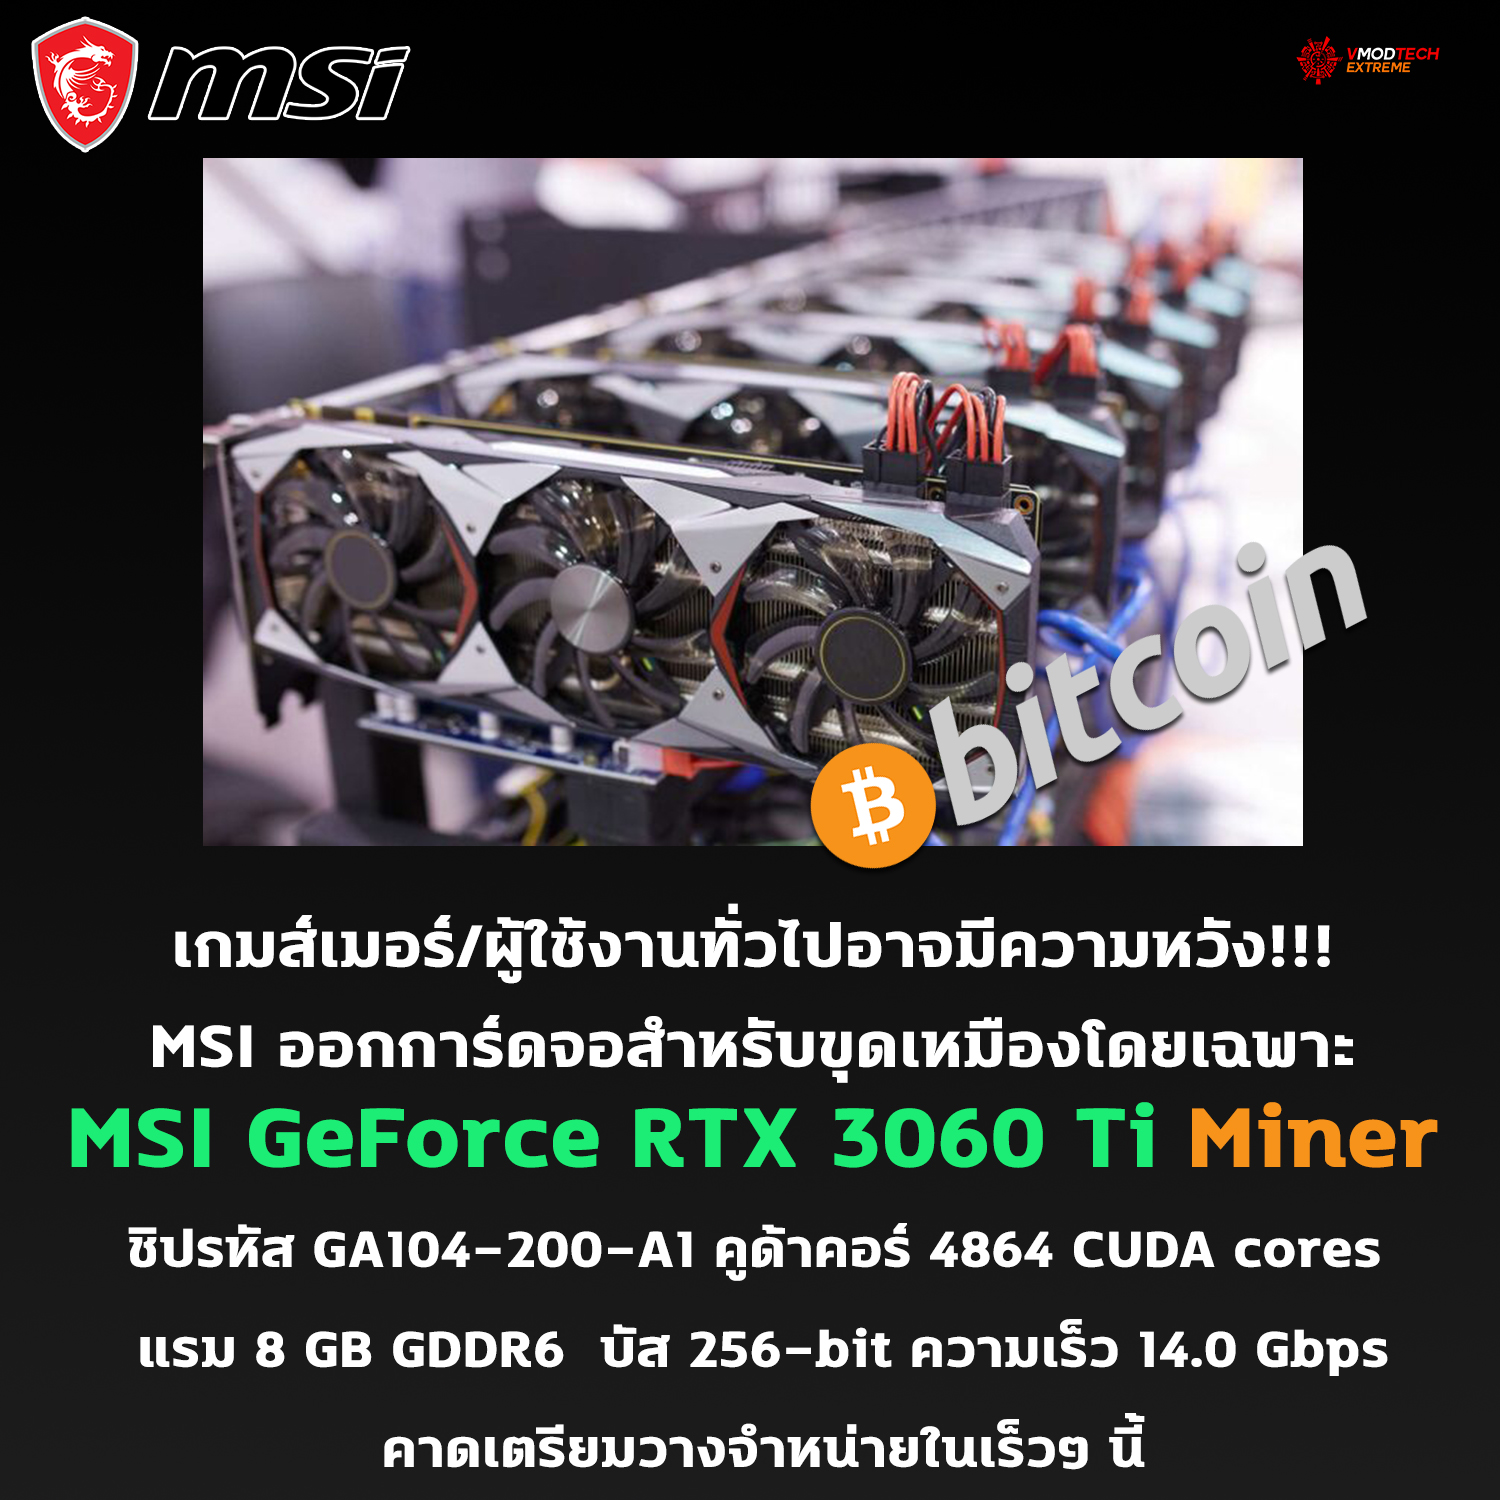 msi geforce rtx 3060 ti miner หลุดการ์ดจอ MSI GeForce RTX 3060 Ti Miner ความจุแรม 8G ออกแบบมาสำหรับขุดเหมือง Crypto โดยเฉพาะ!!! 